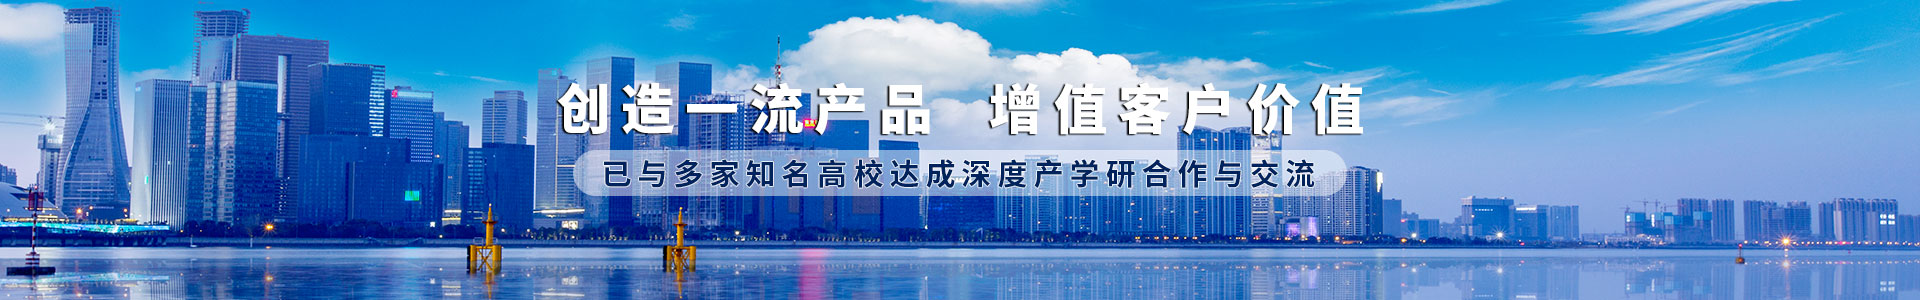 BB电子·(china)官方网站_image1567